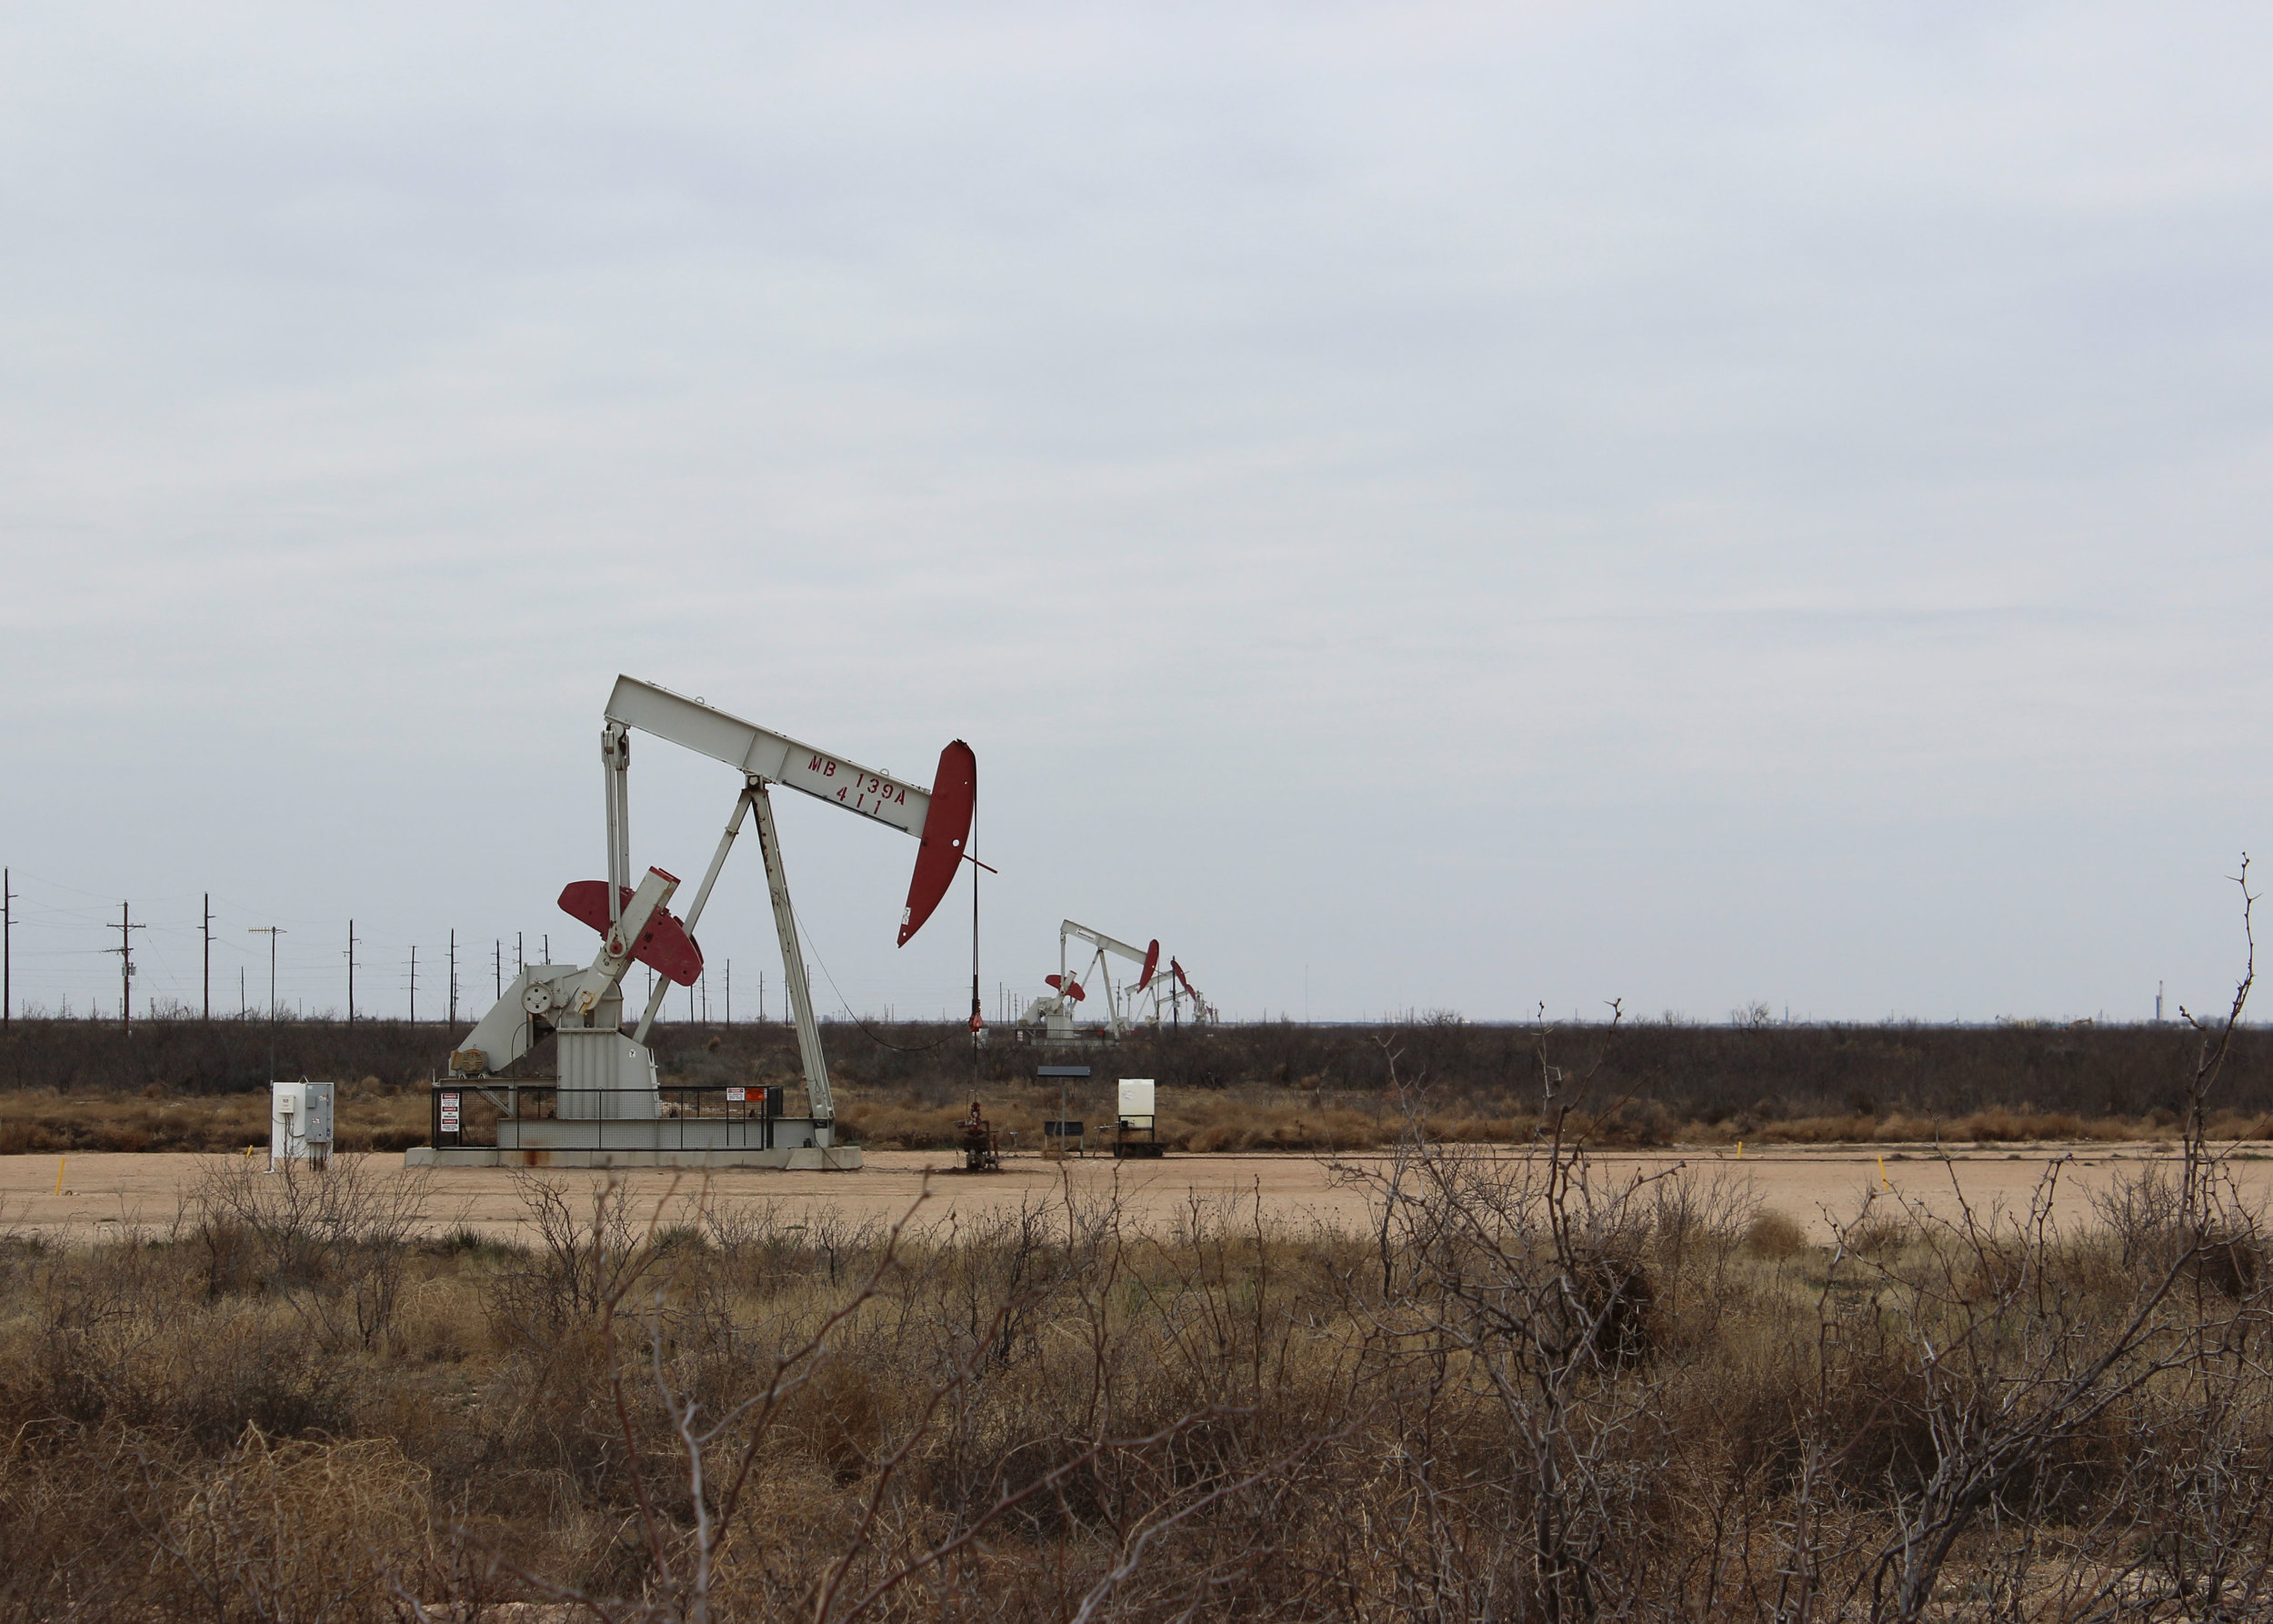 Oilfields in Odessa, TX